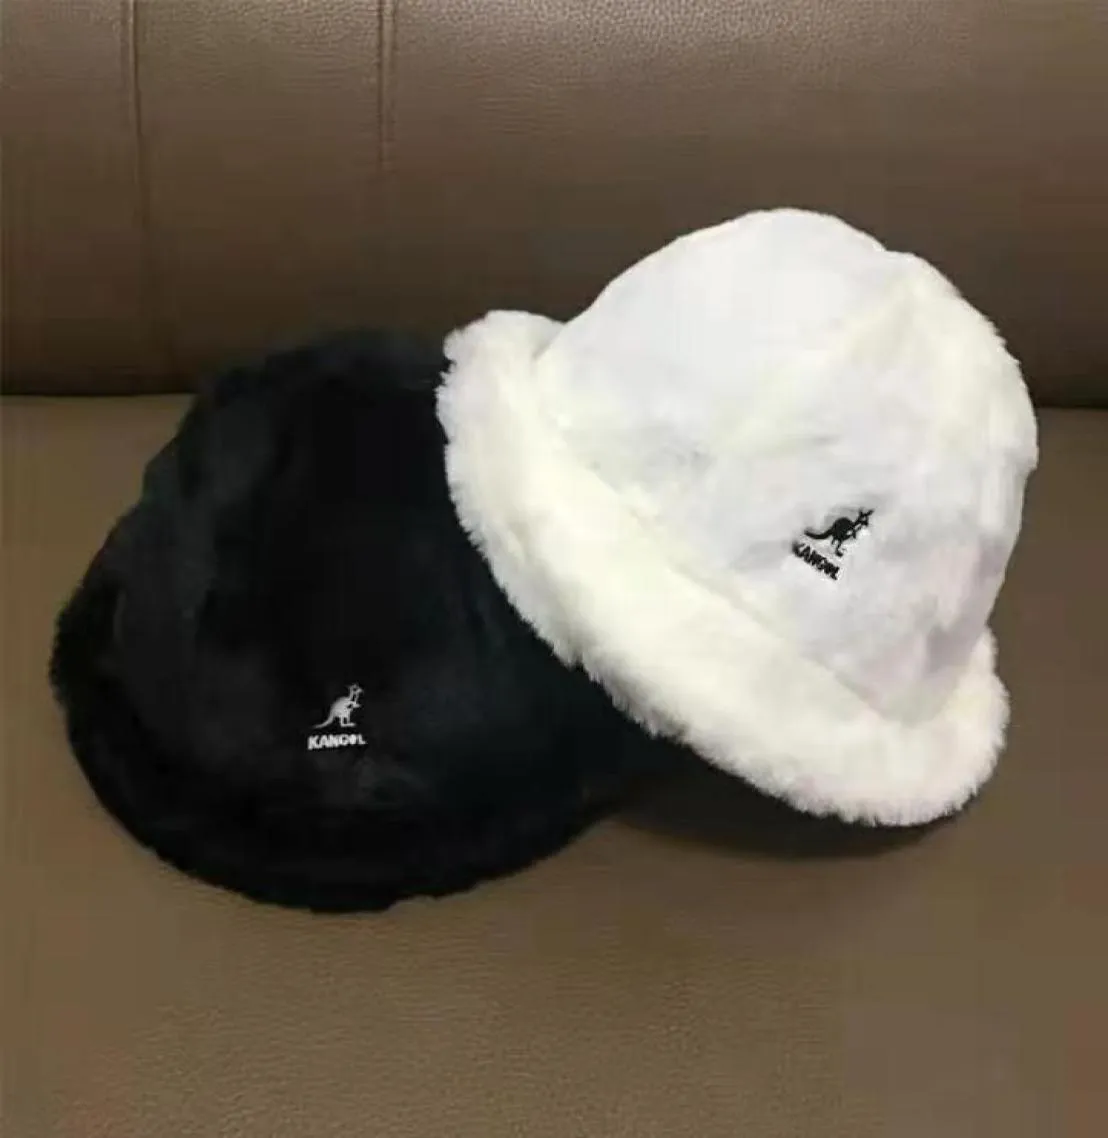 Stingy Brim Hats Top Fashion New Kangol Kangaroo Rabbit Basin Embroidered Warm White Fur Fisherman Hat Women Gift27633535516818